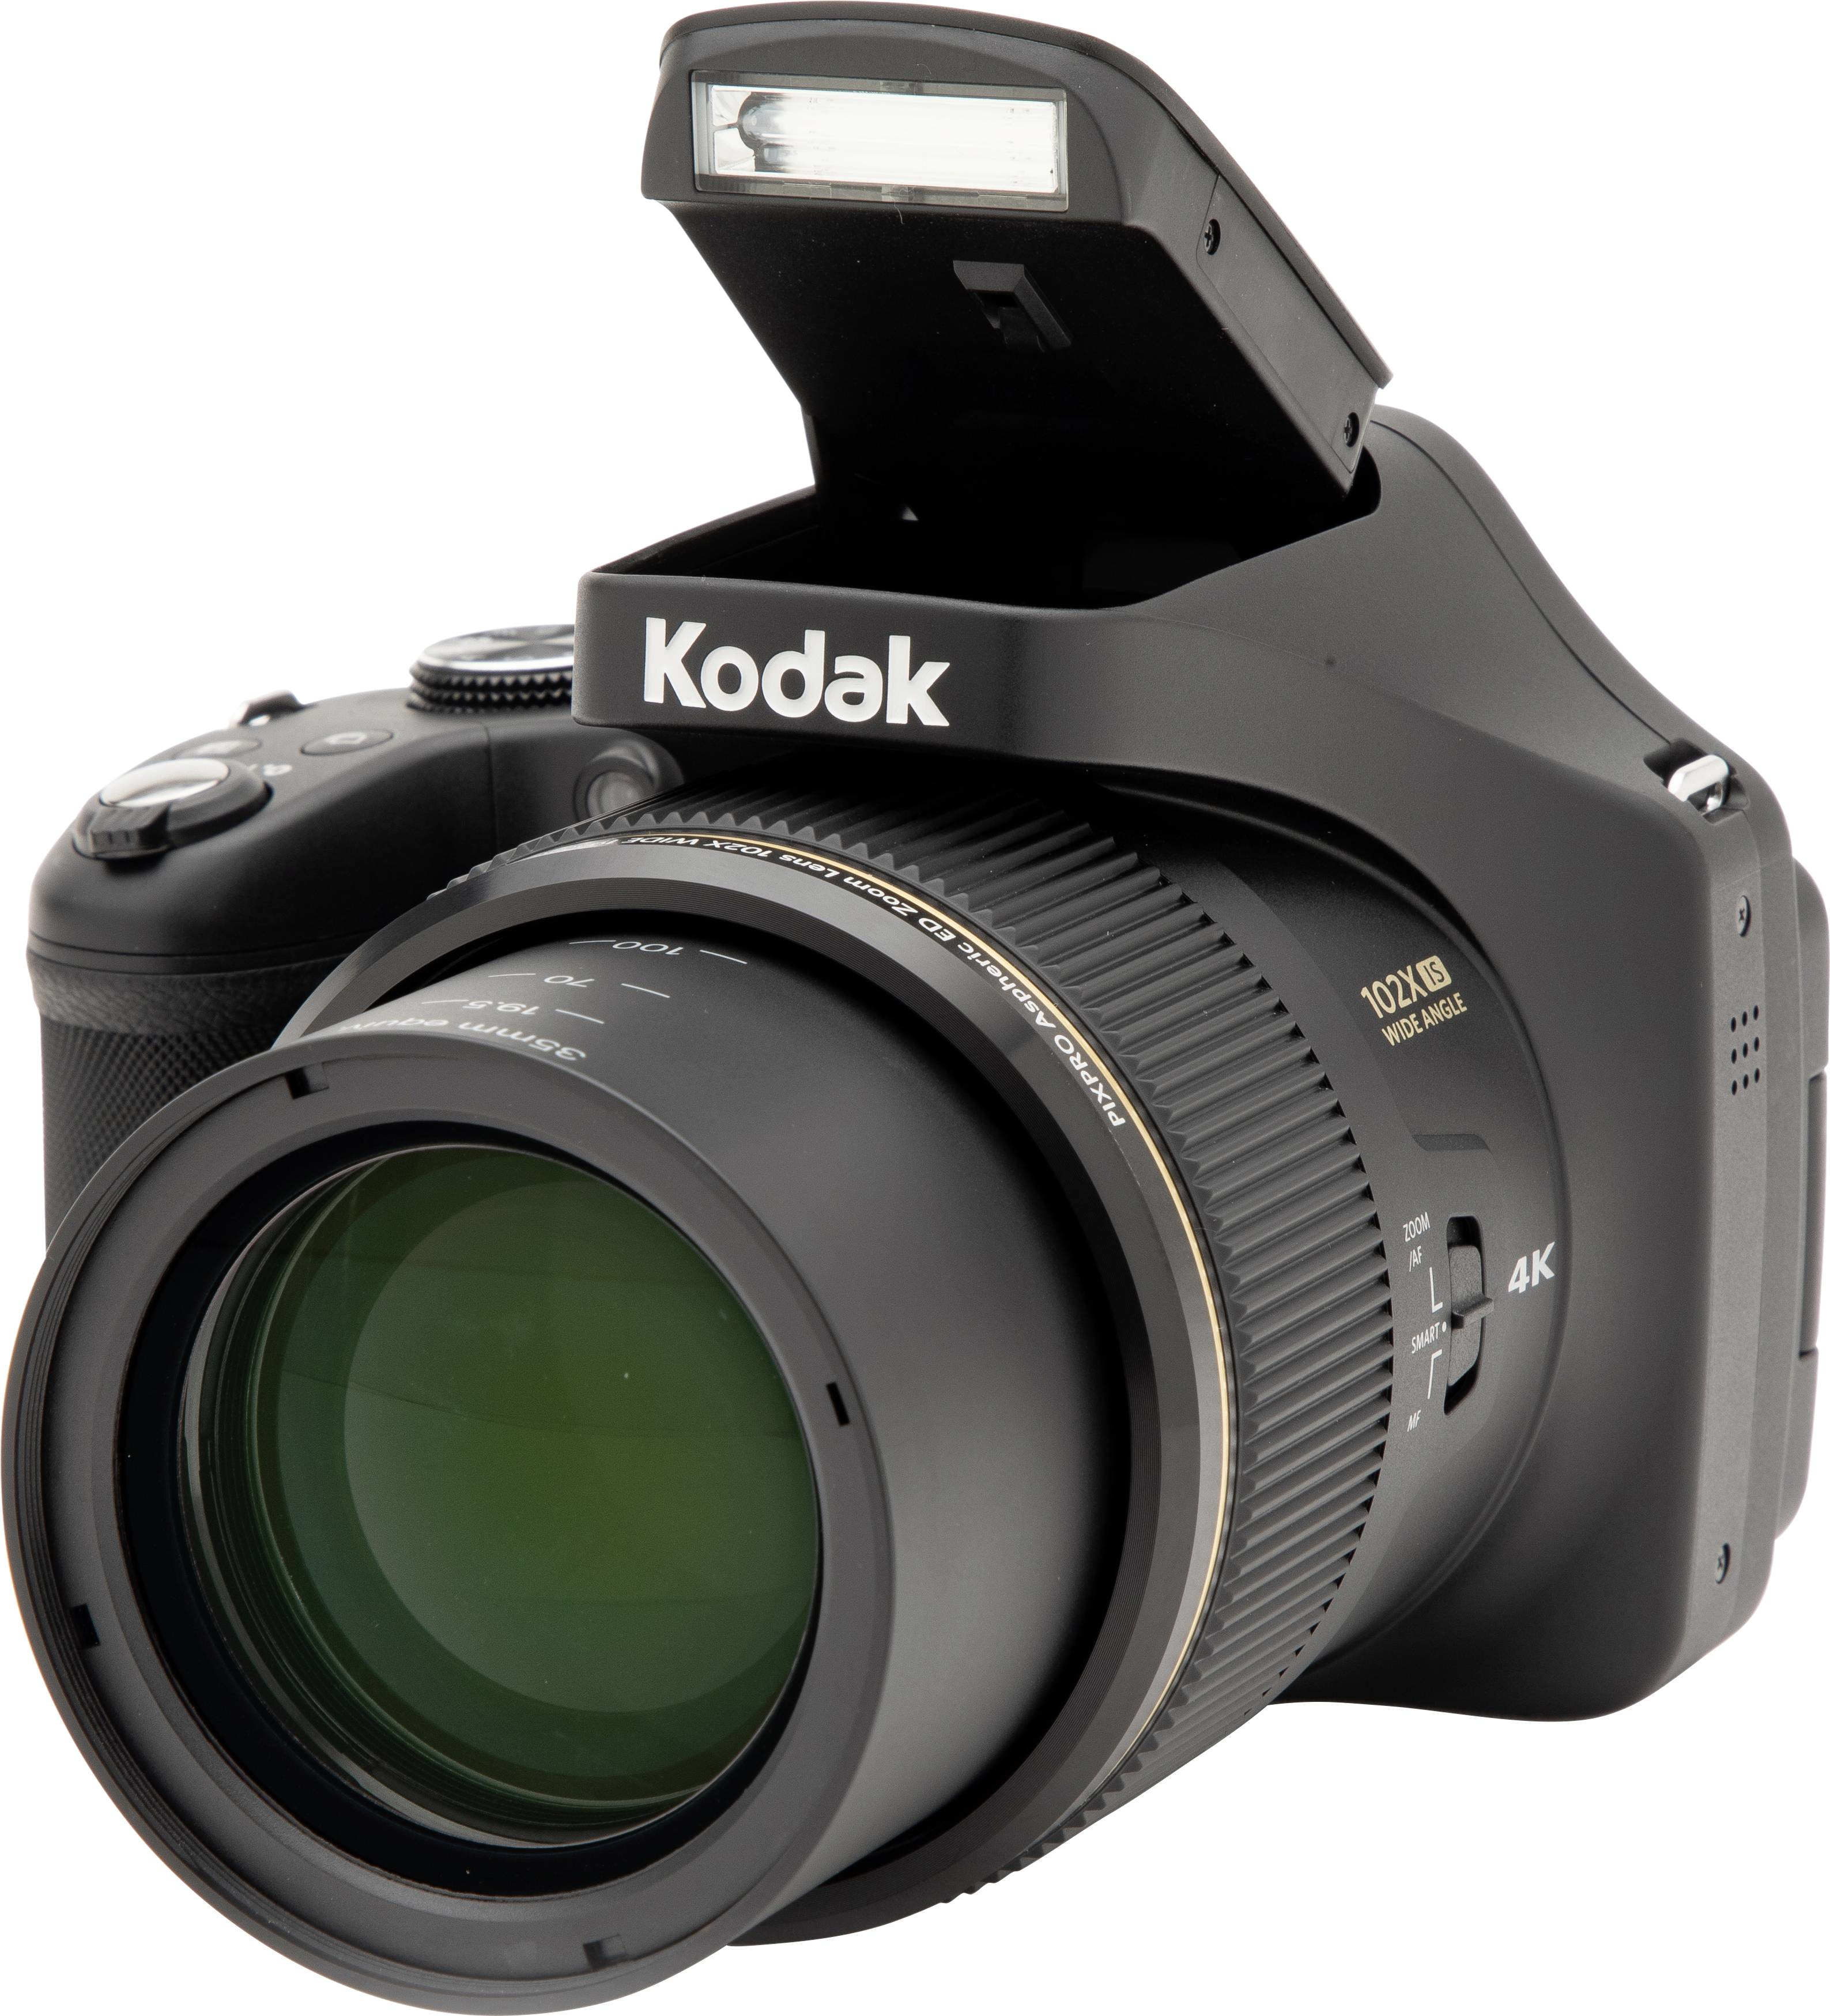 Fotocamera digitale Kodak Astro Zoom AZ1000 Bridge 20 MP CMOS Nero [AZ1000BK]